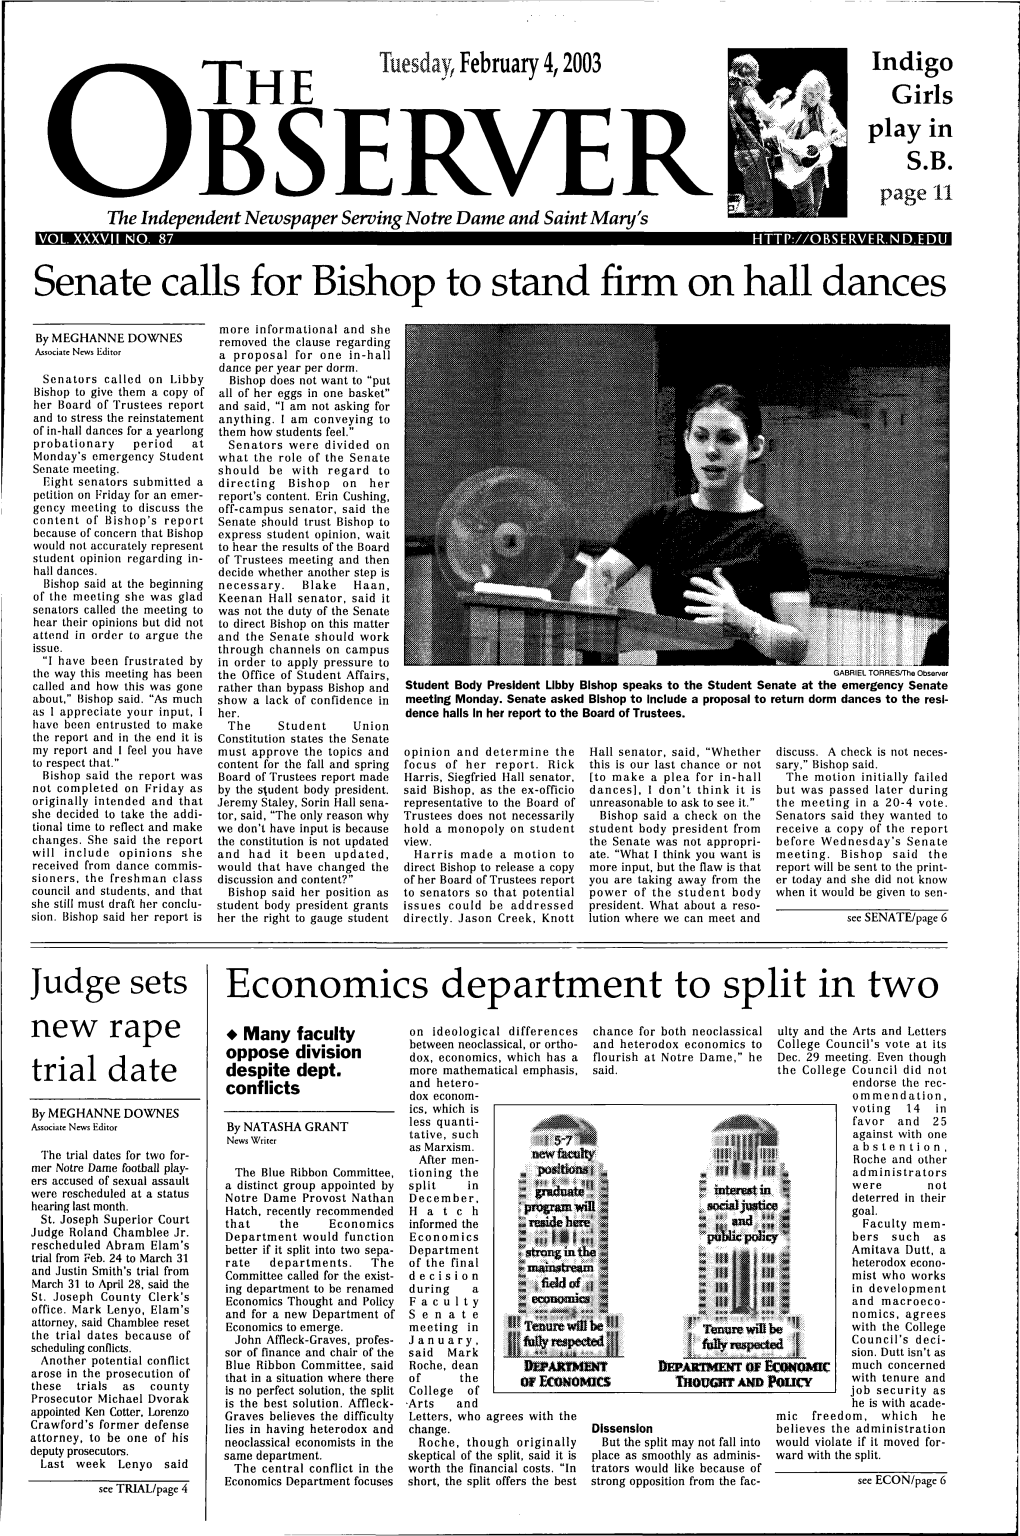 Senate Calls for Bishop to Stand Firm on Hall Dances Economics